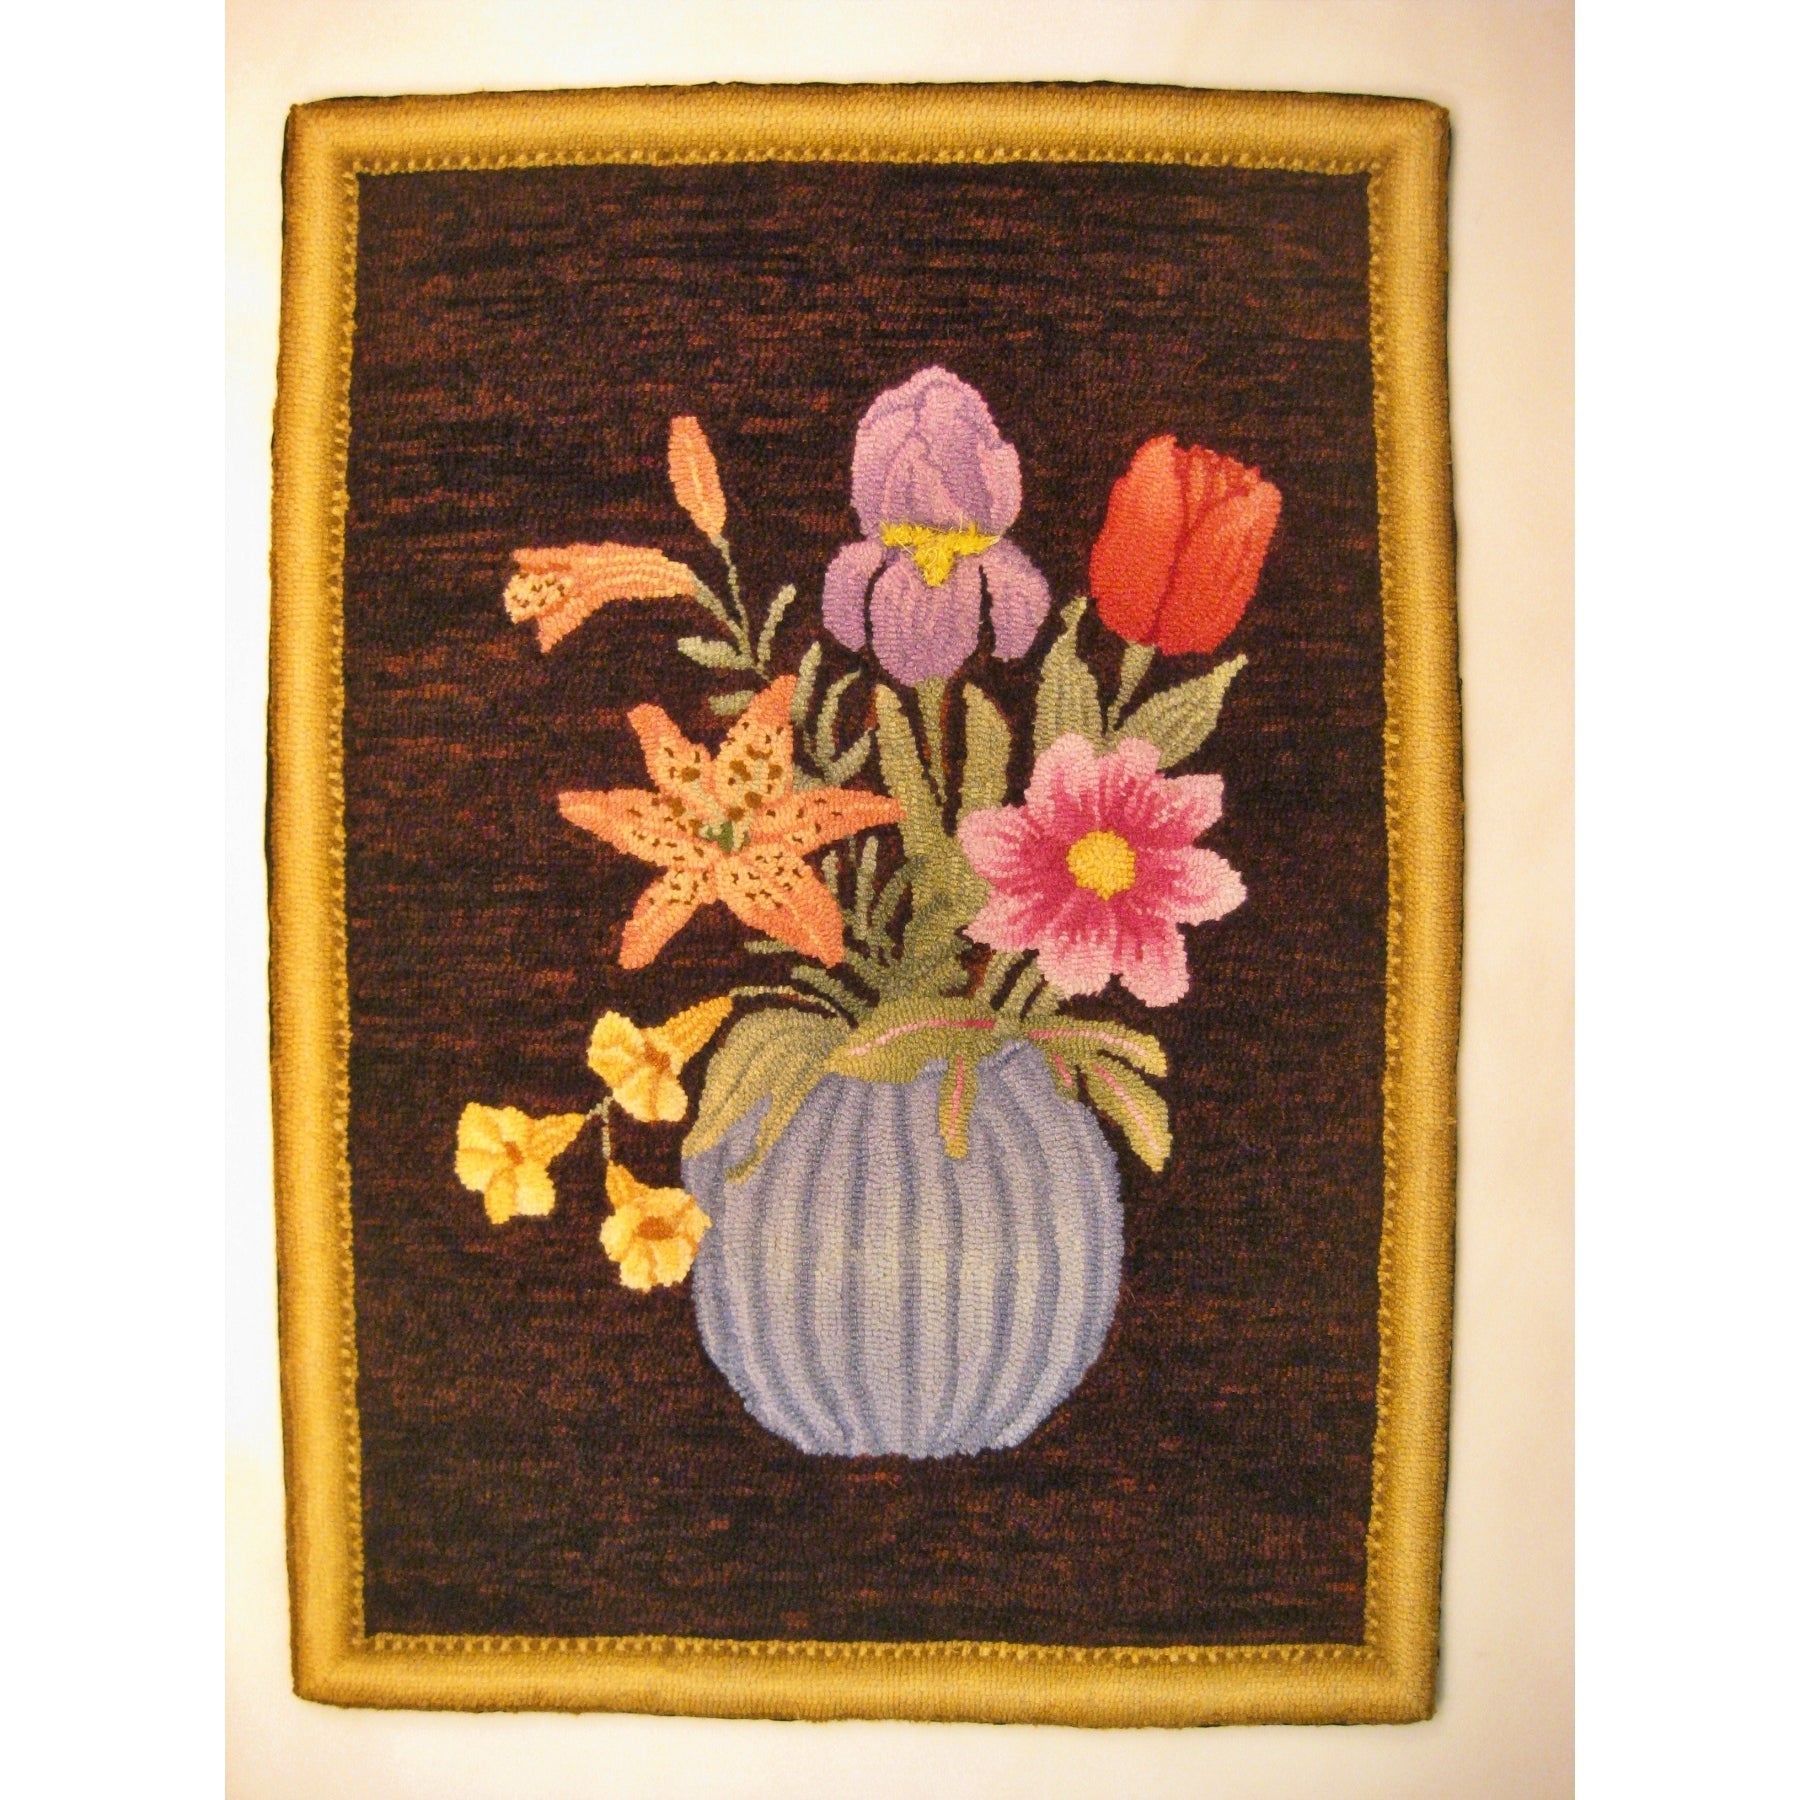 Vase with Flowers, rug hooked by John Leonard